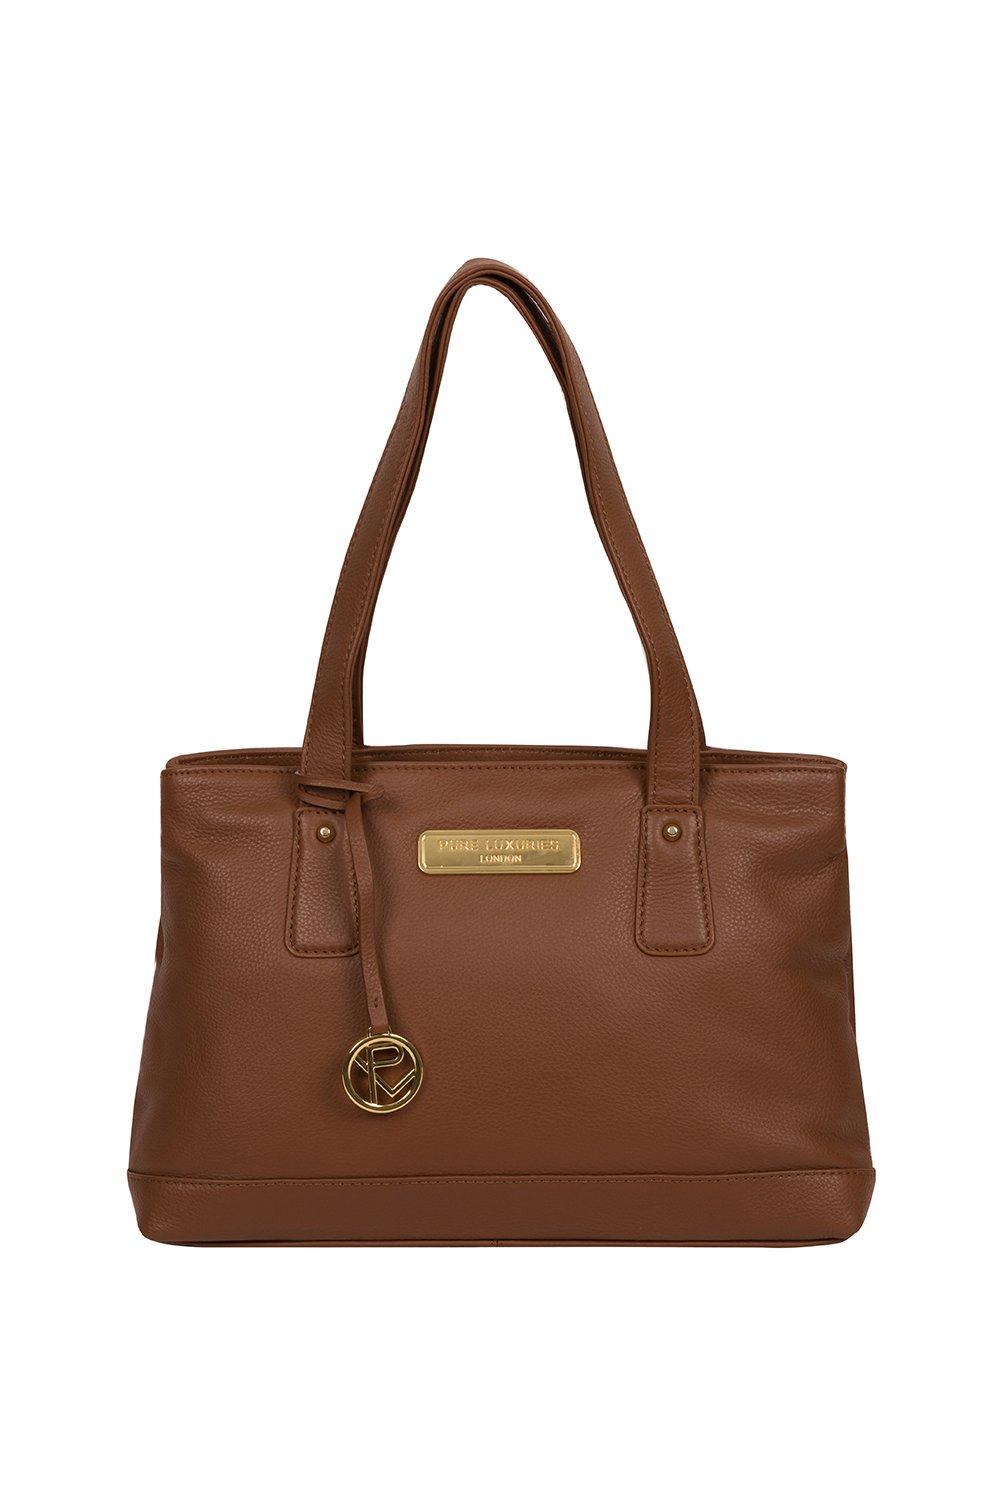 Shop Debenhams Women's Crossbody Bags up to 90% Off | DealDoodle